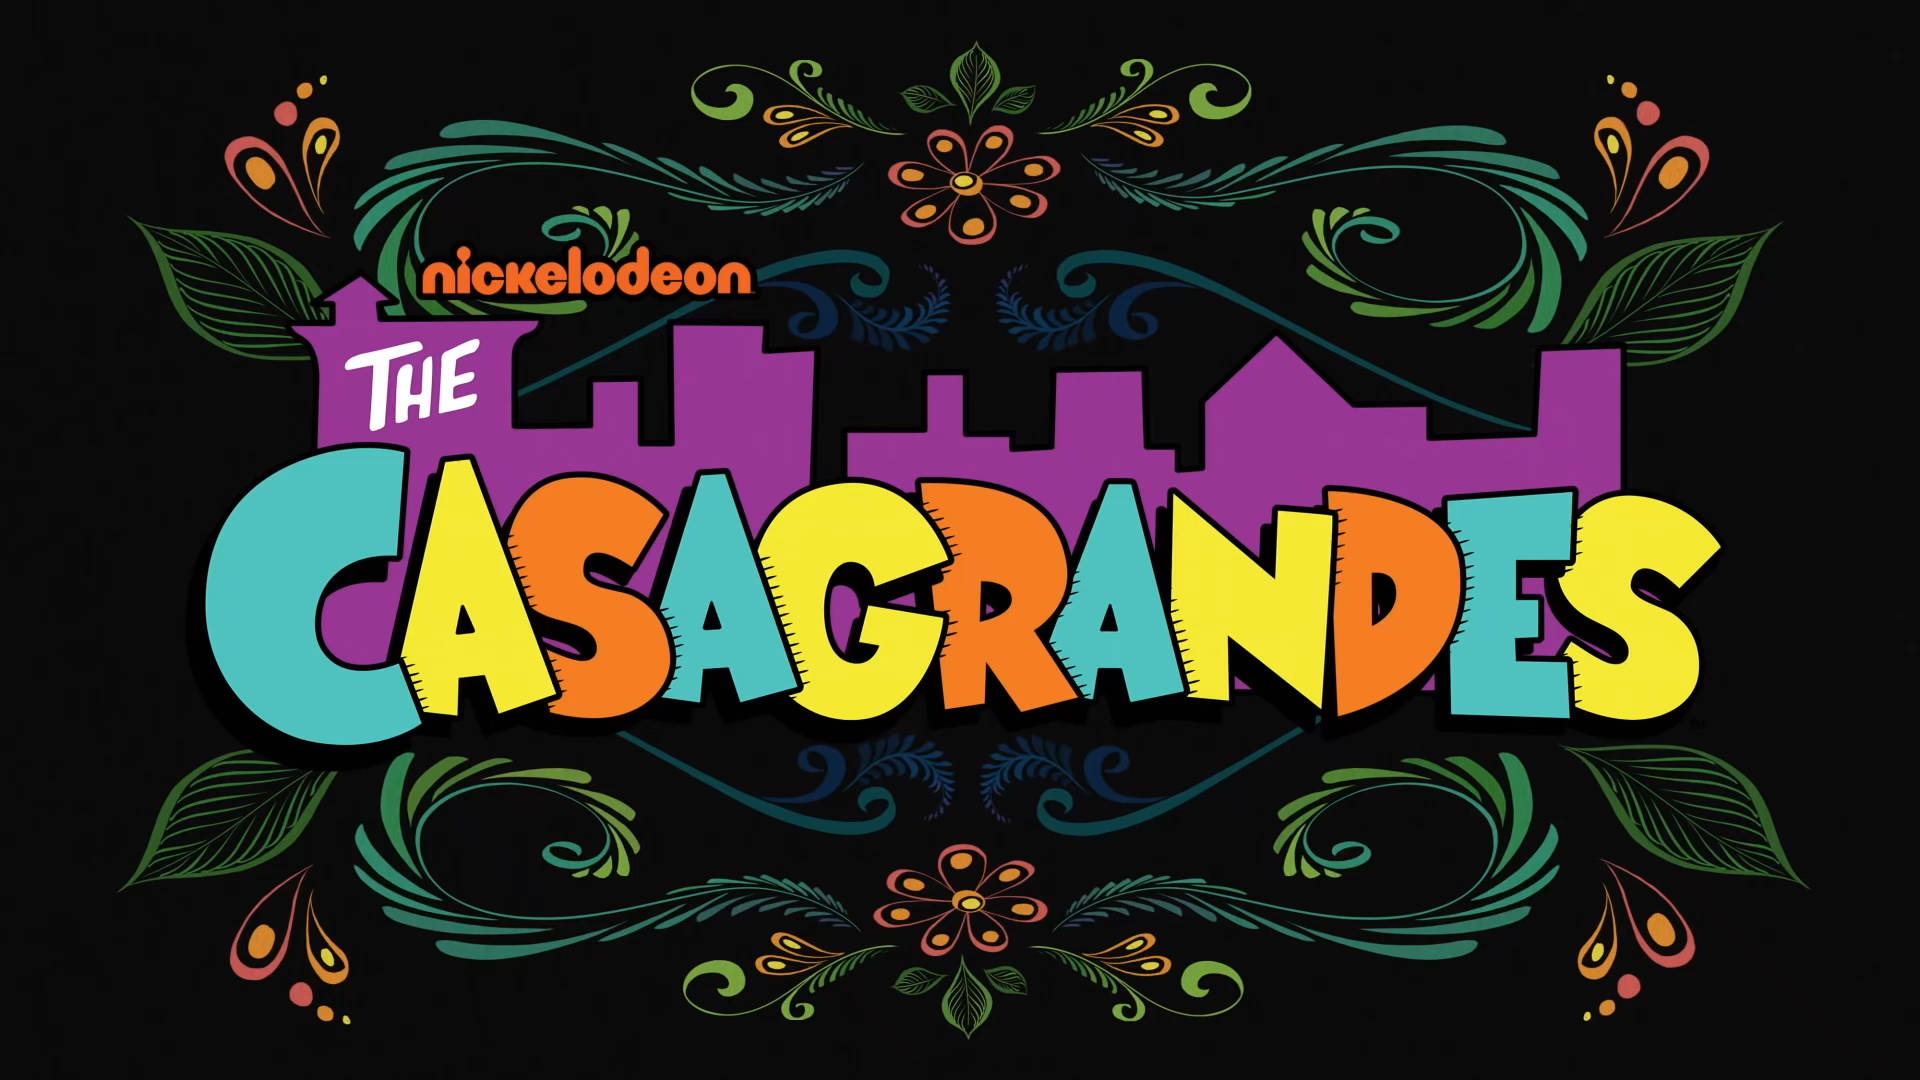 The Casagrandes Logo Background